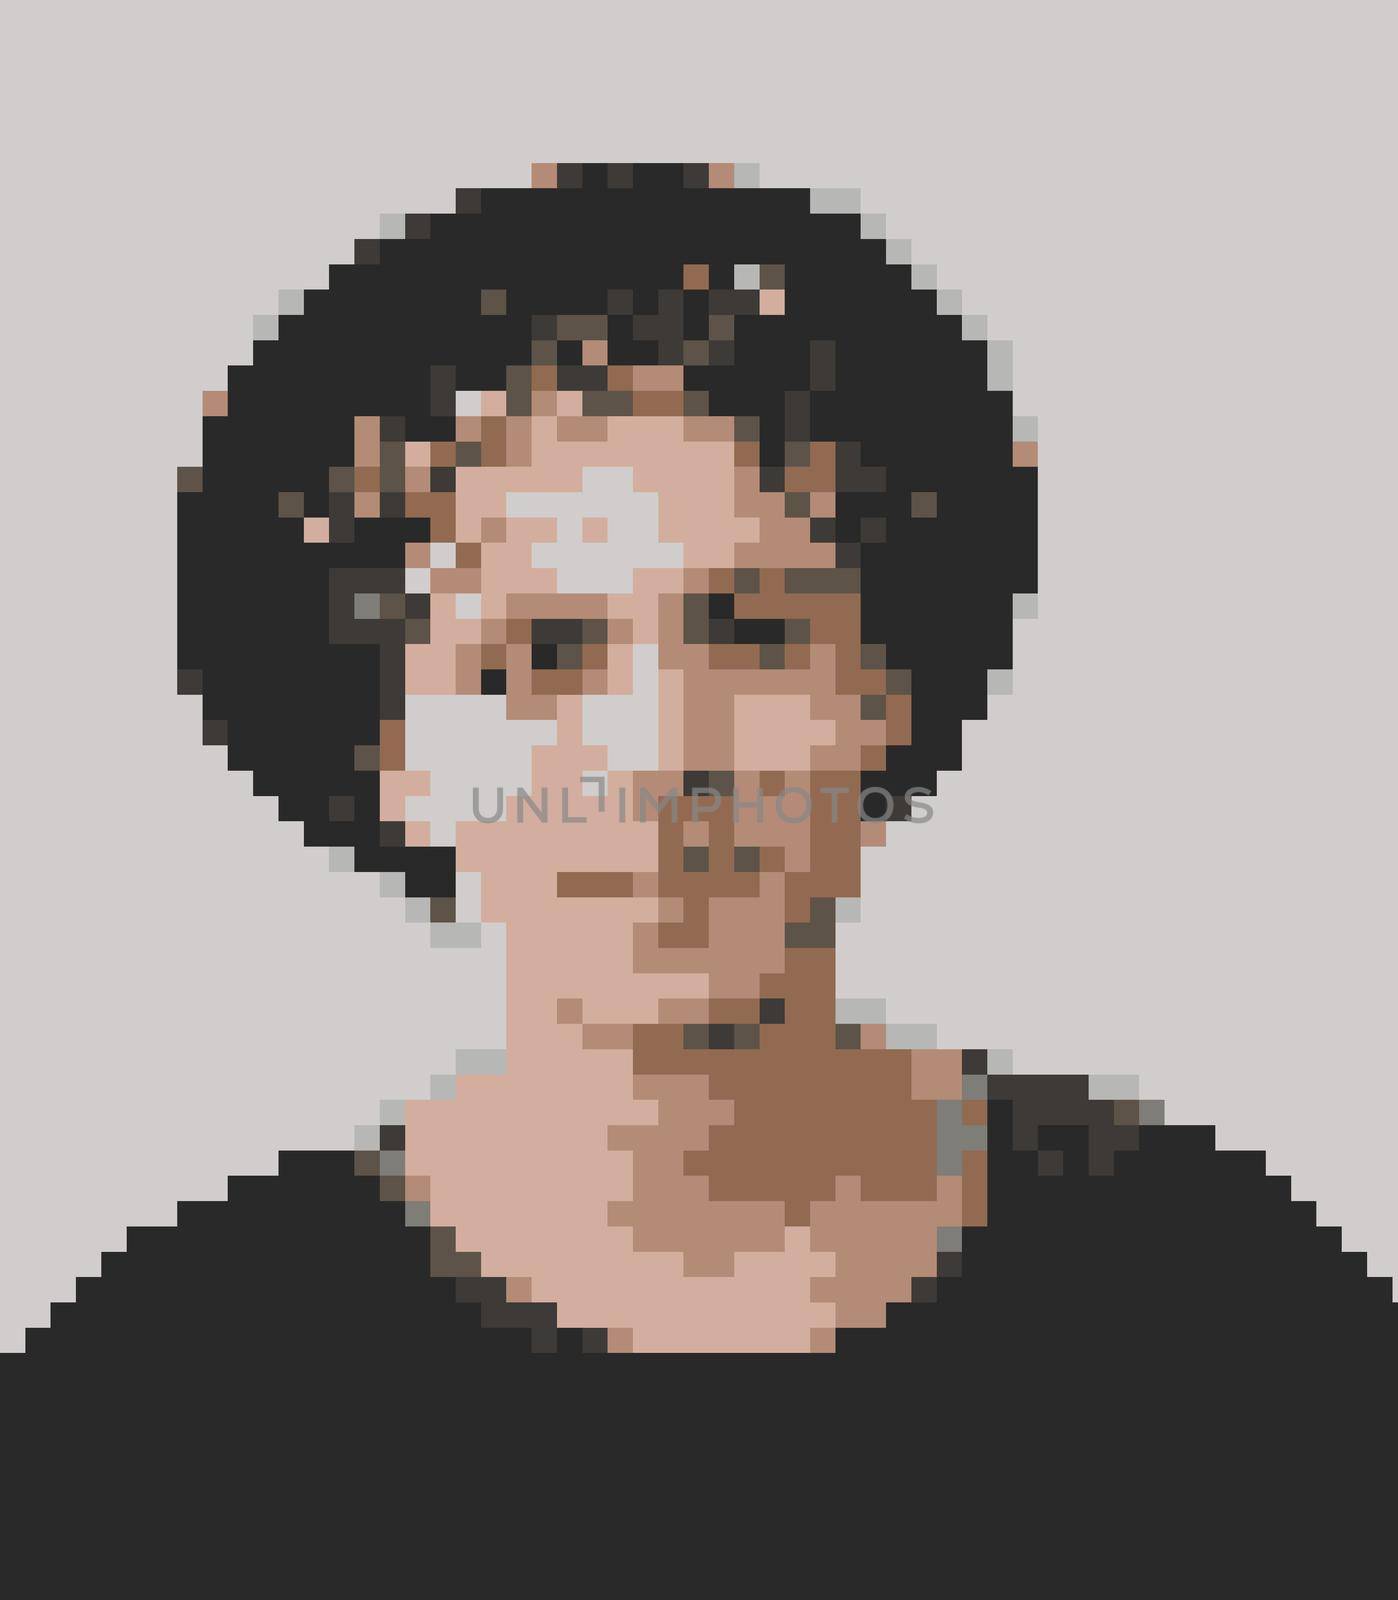 Pixel Art of young unrecognisable man portrait. High quality photo